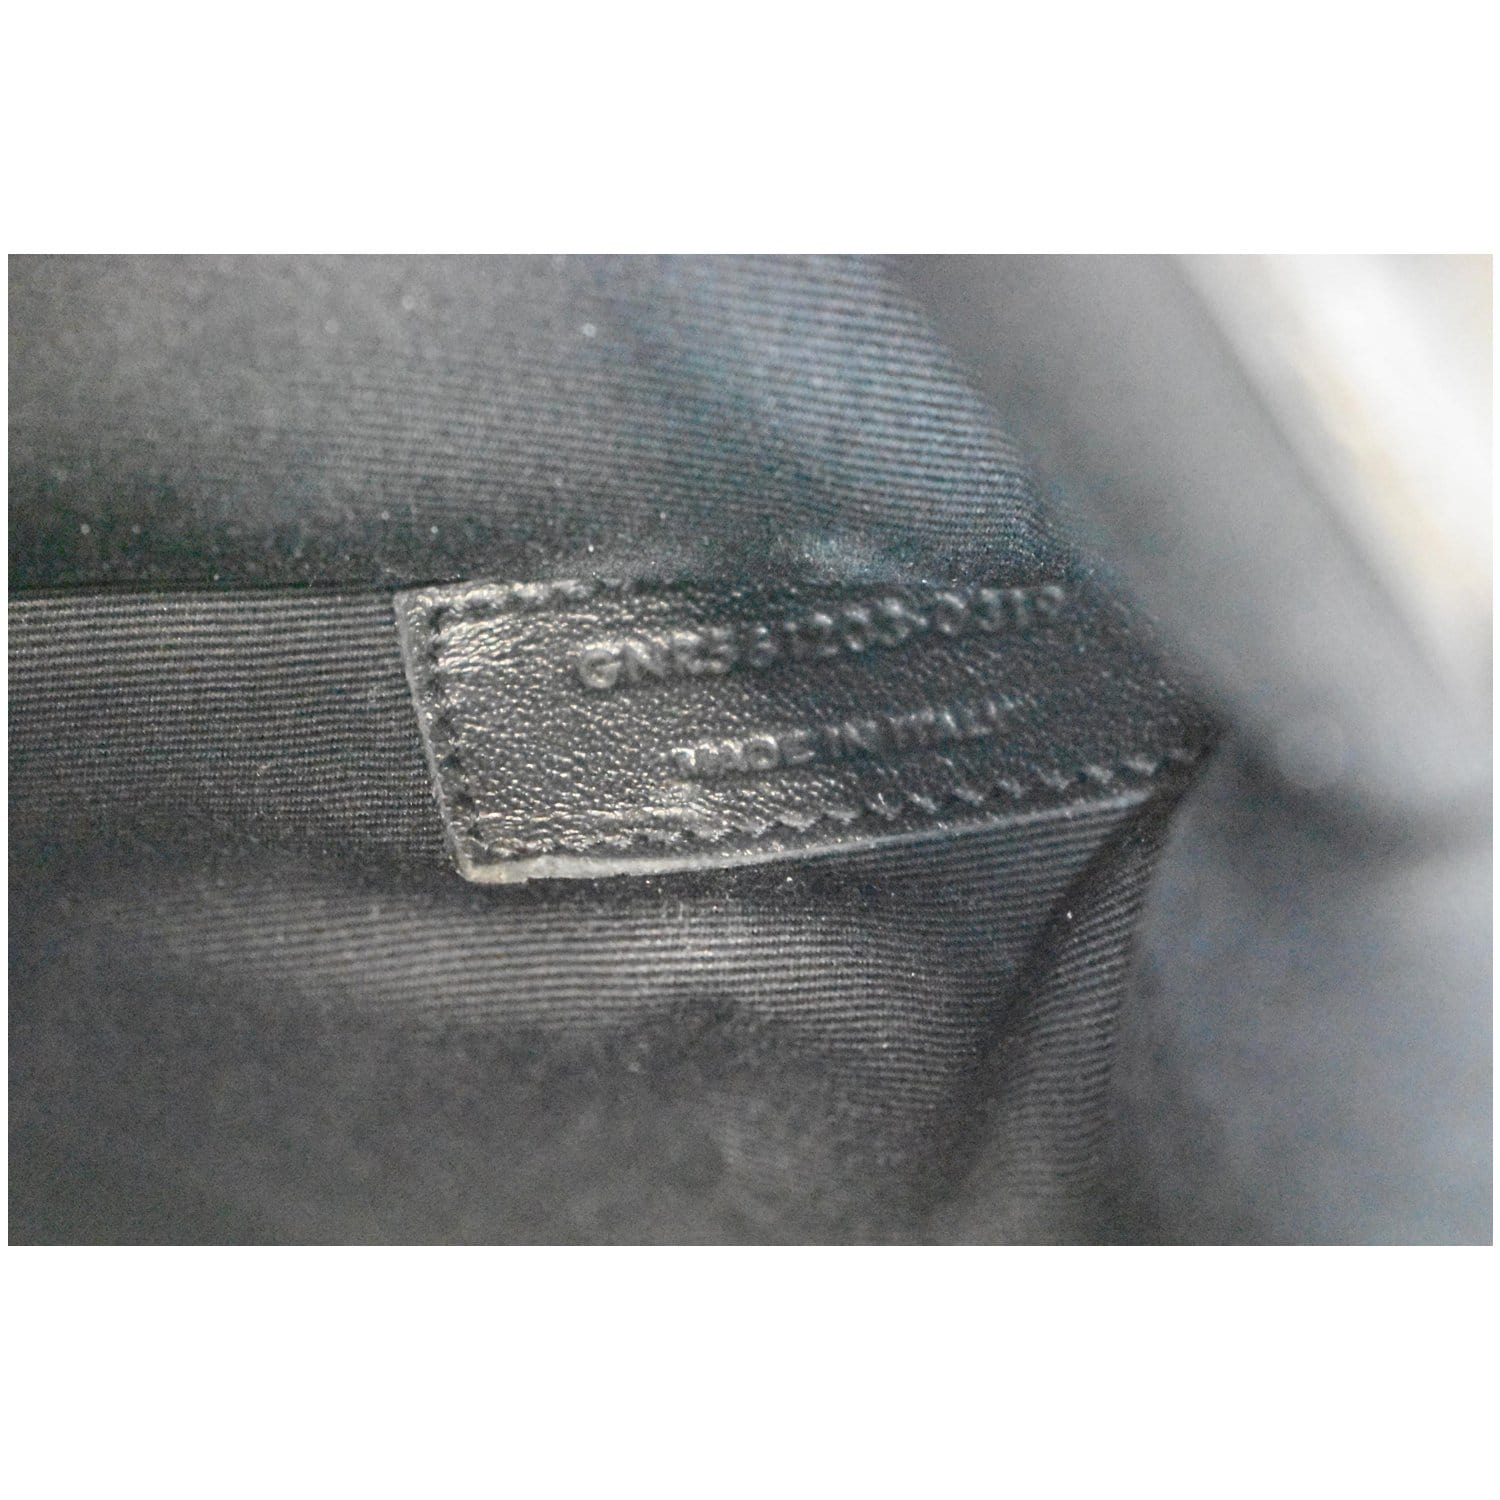 Saint Laurent Uptown envelope leather clutch bag - ShopStyle